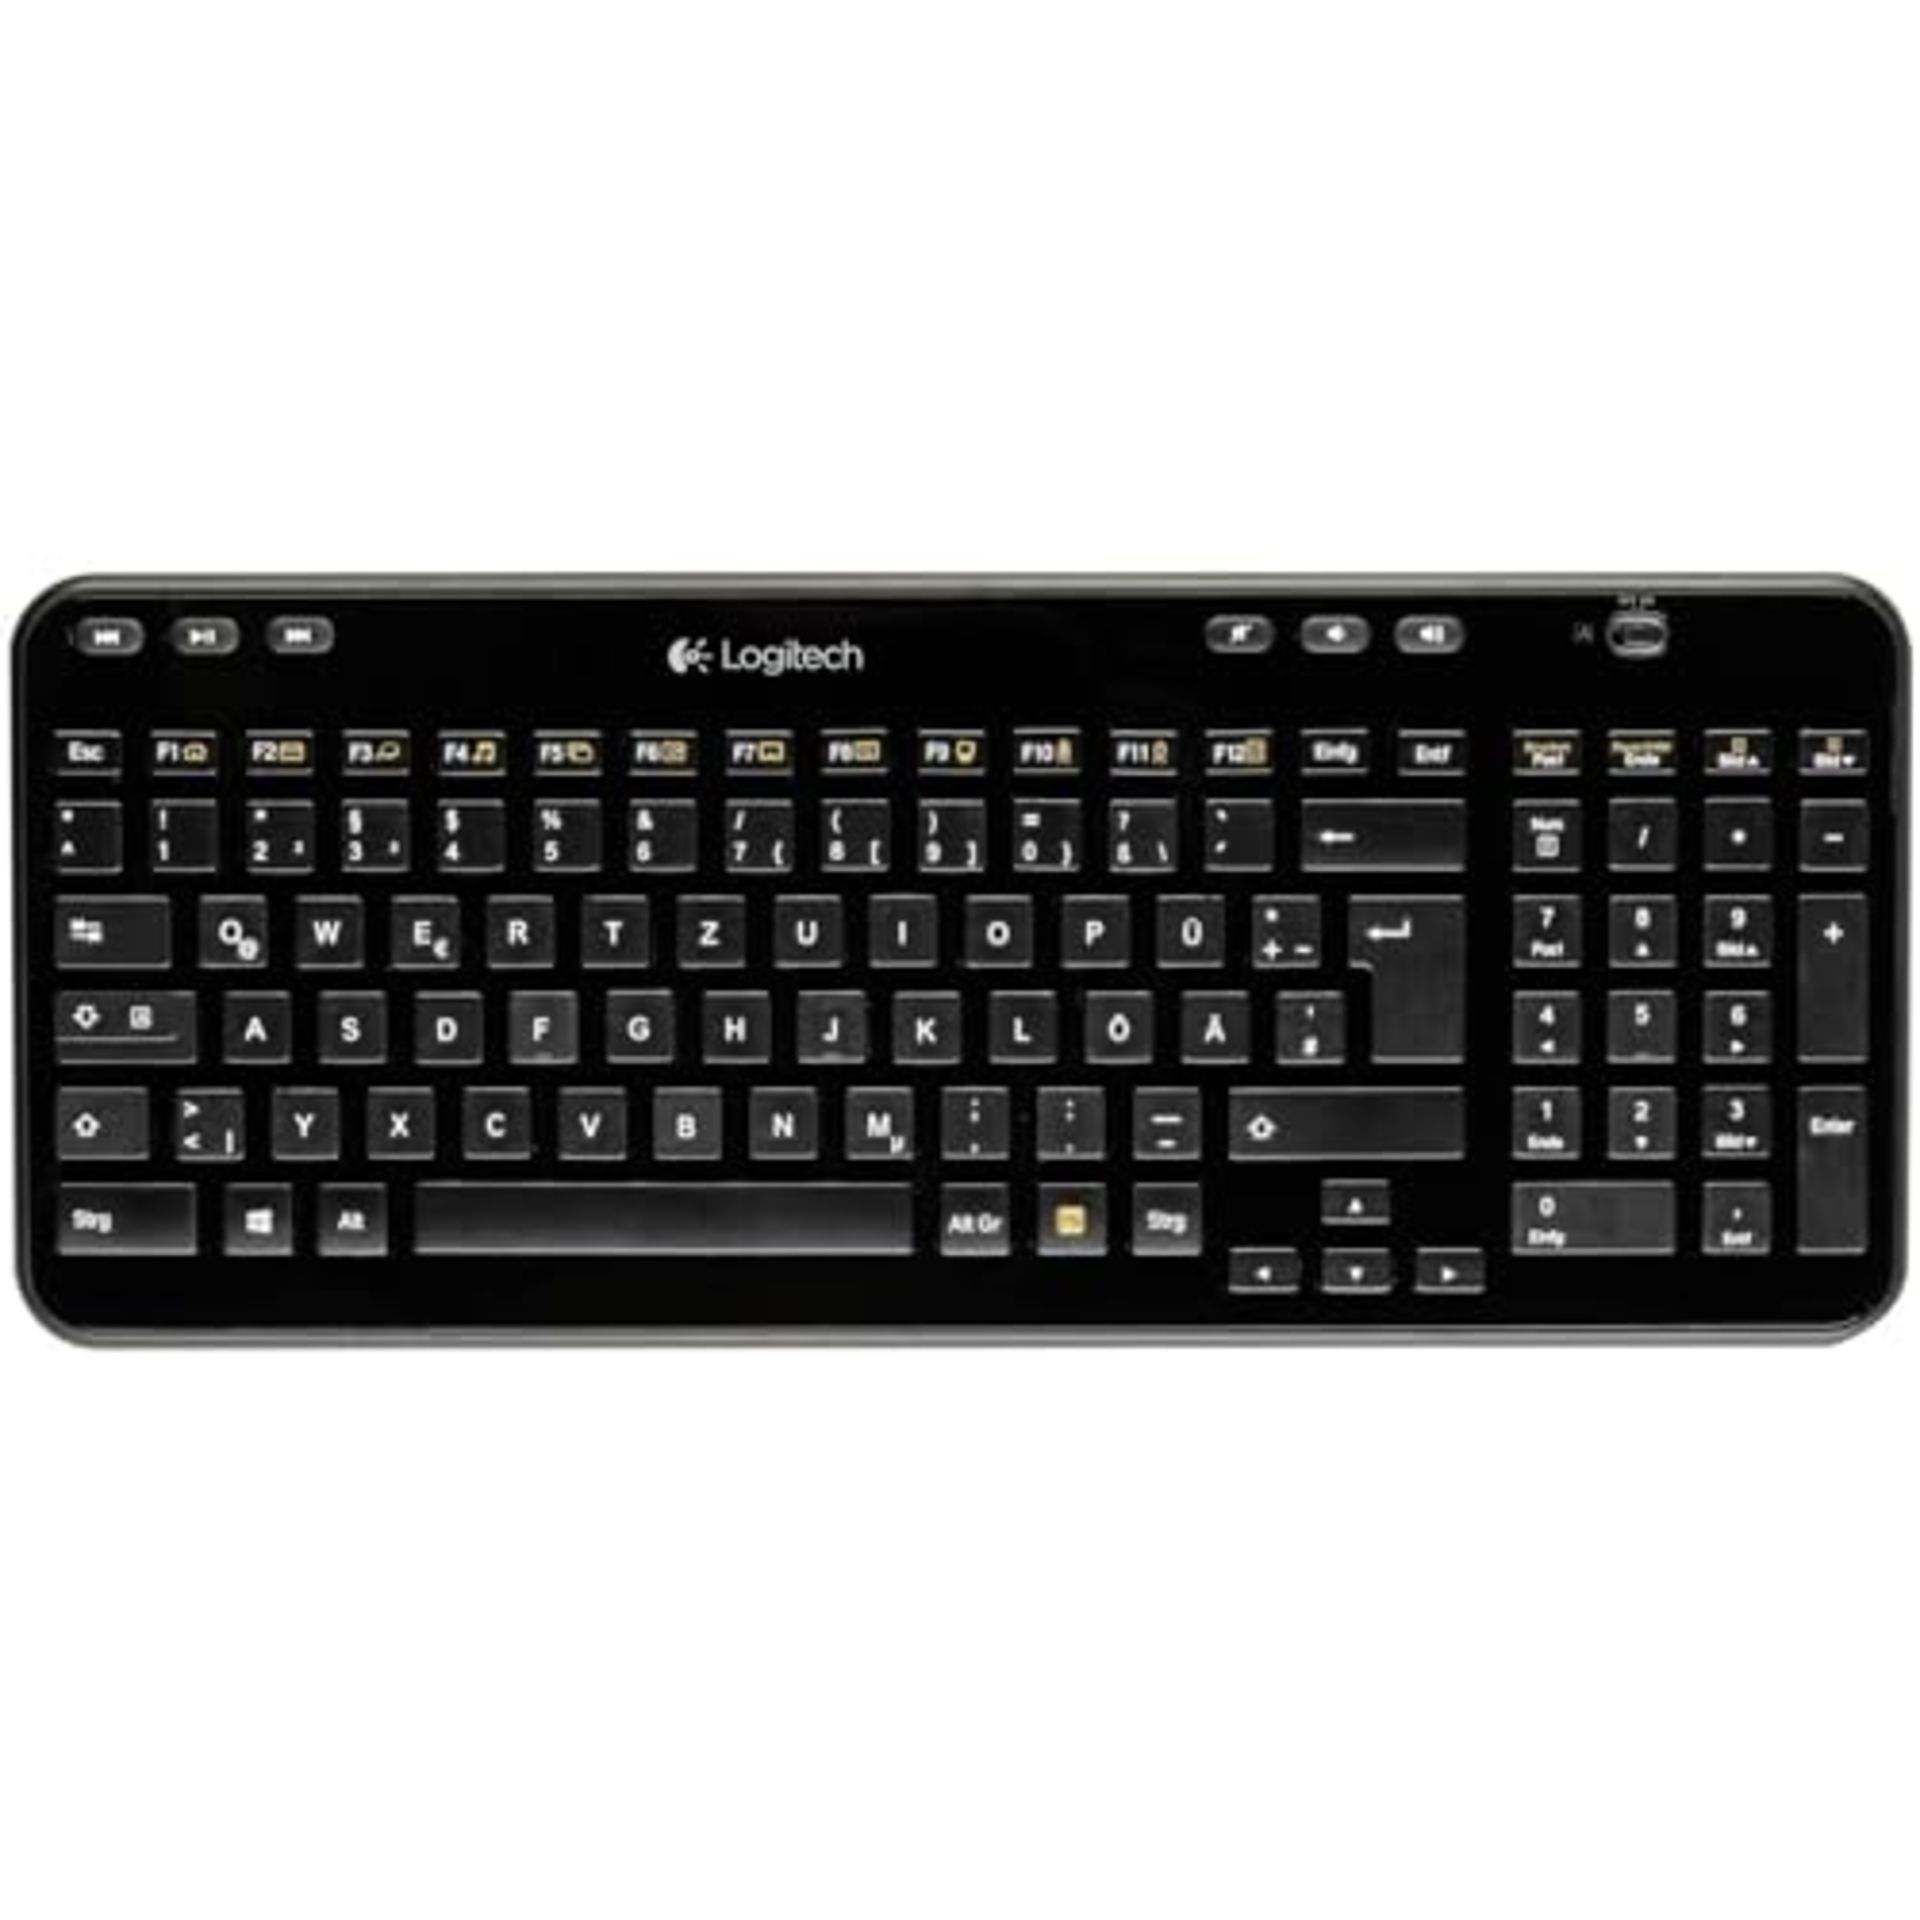 [INCOMPLETE] Logitech K360 Compact Wireless Keyboard for Windows, QWERTZ German Layout